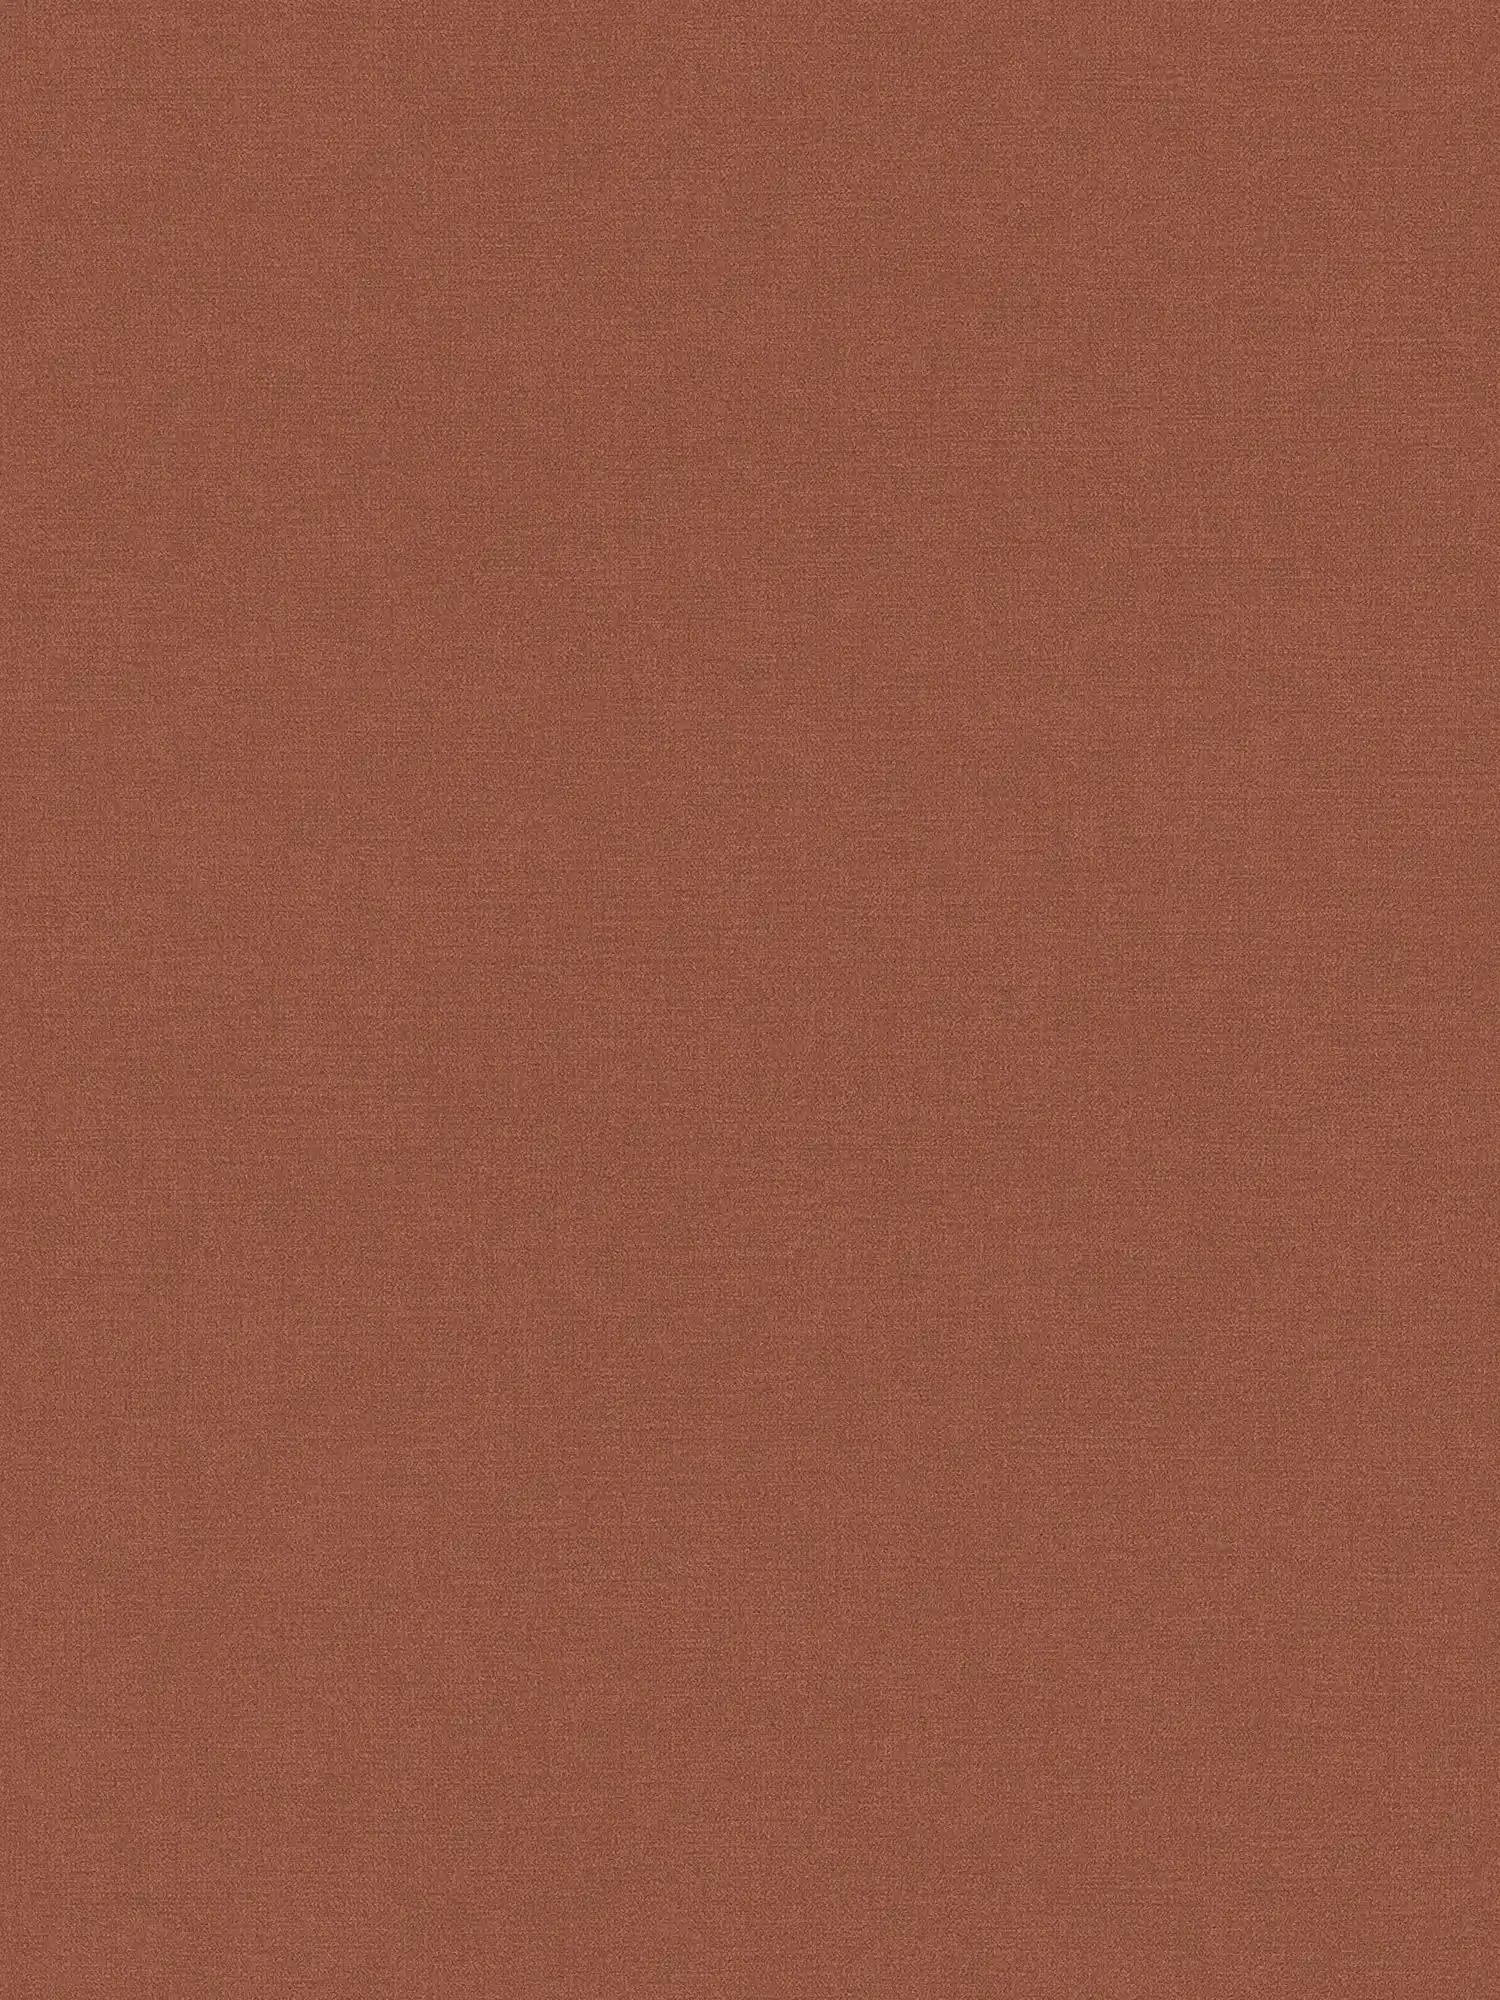 Plain wallpaper in dark shades - reddish brown
